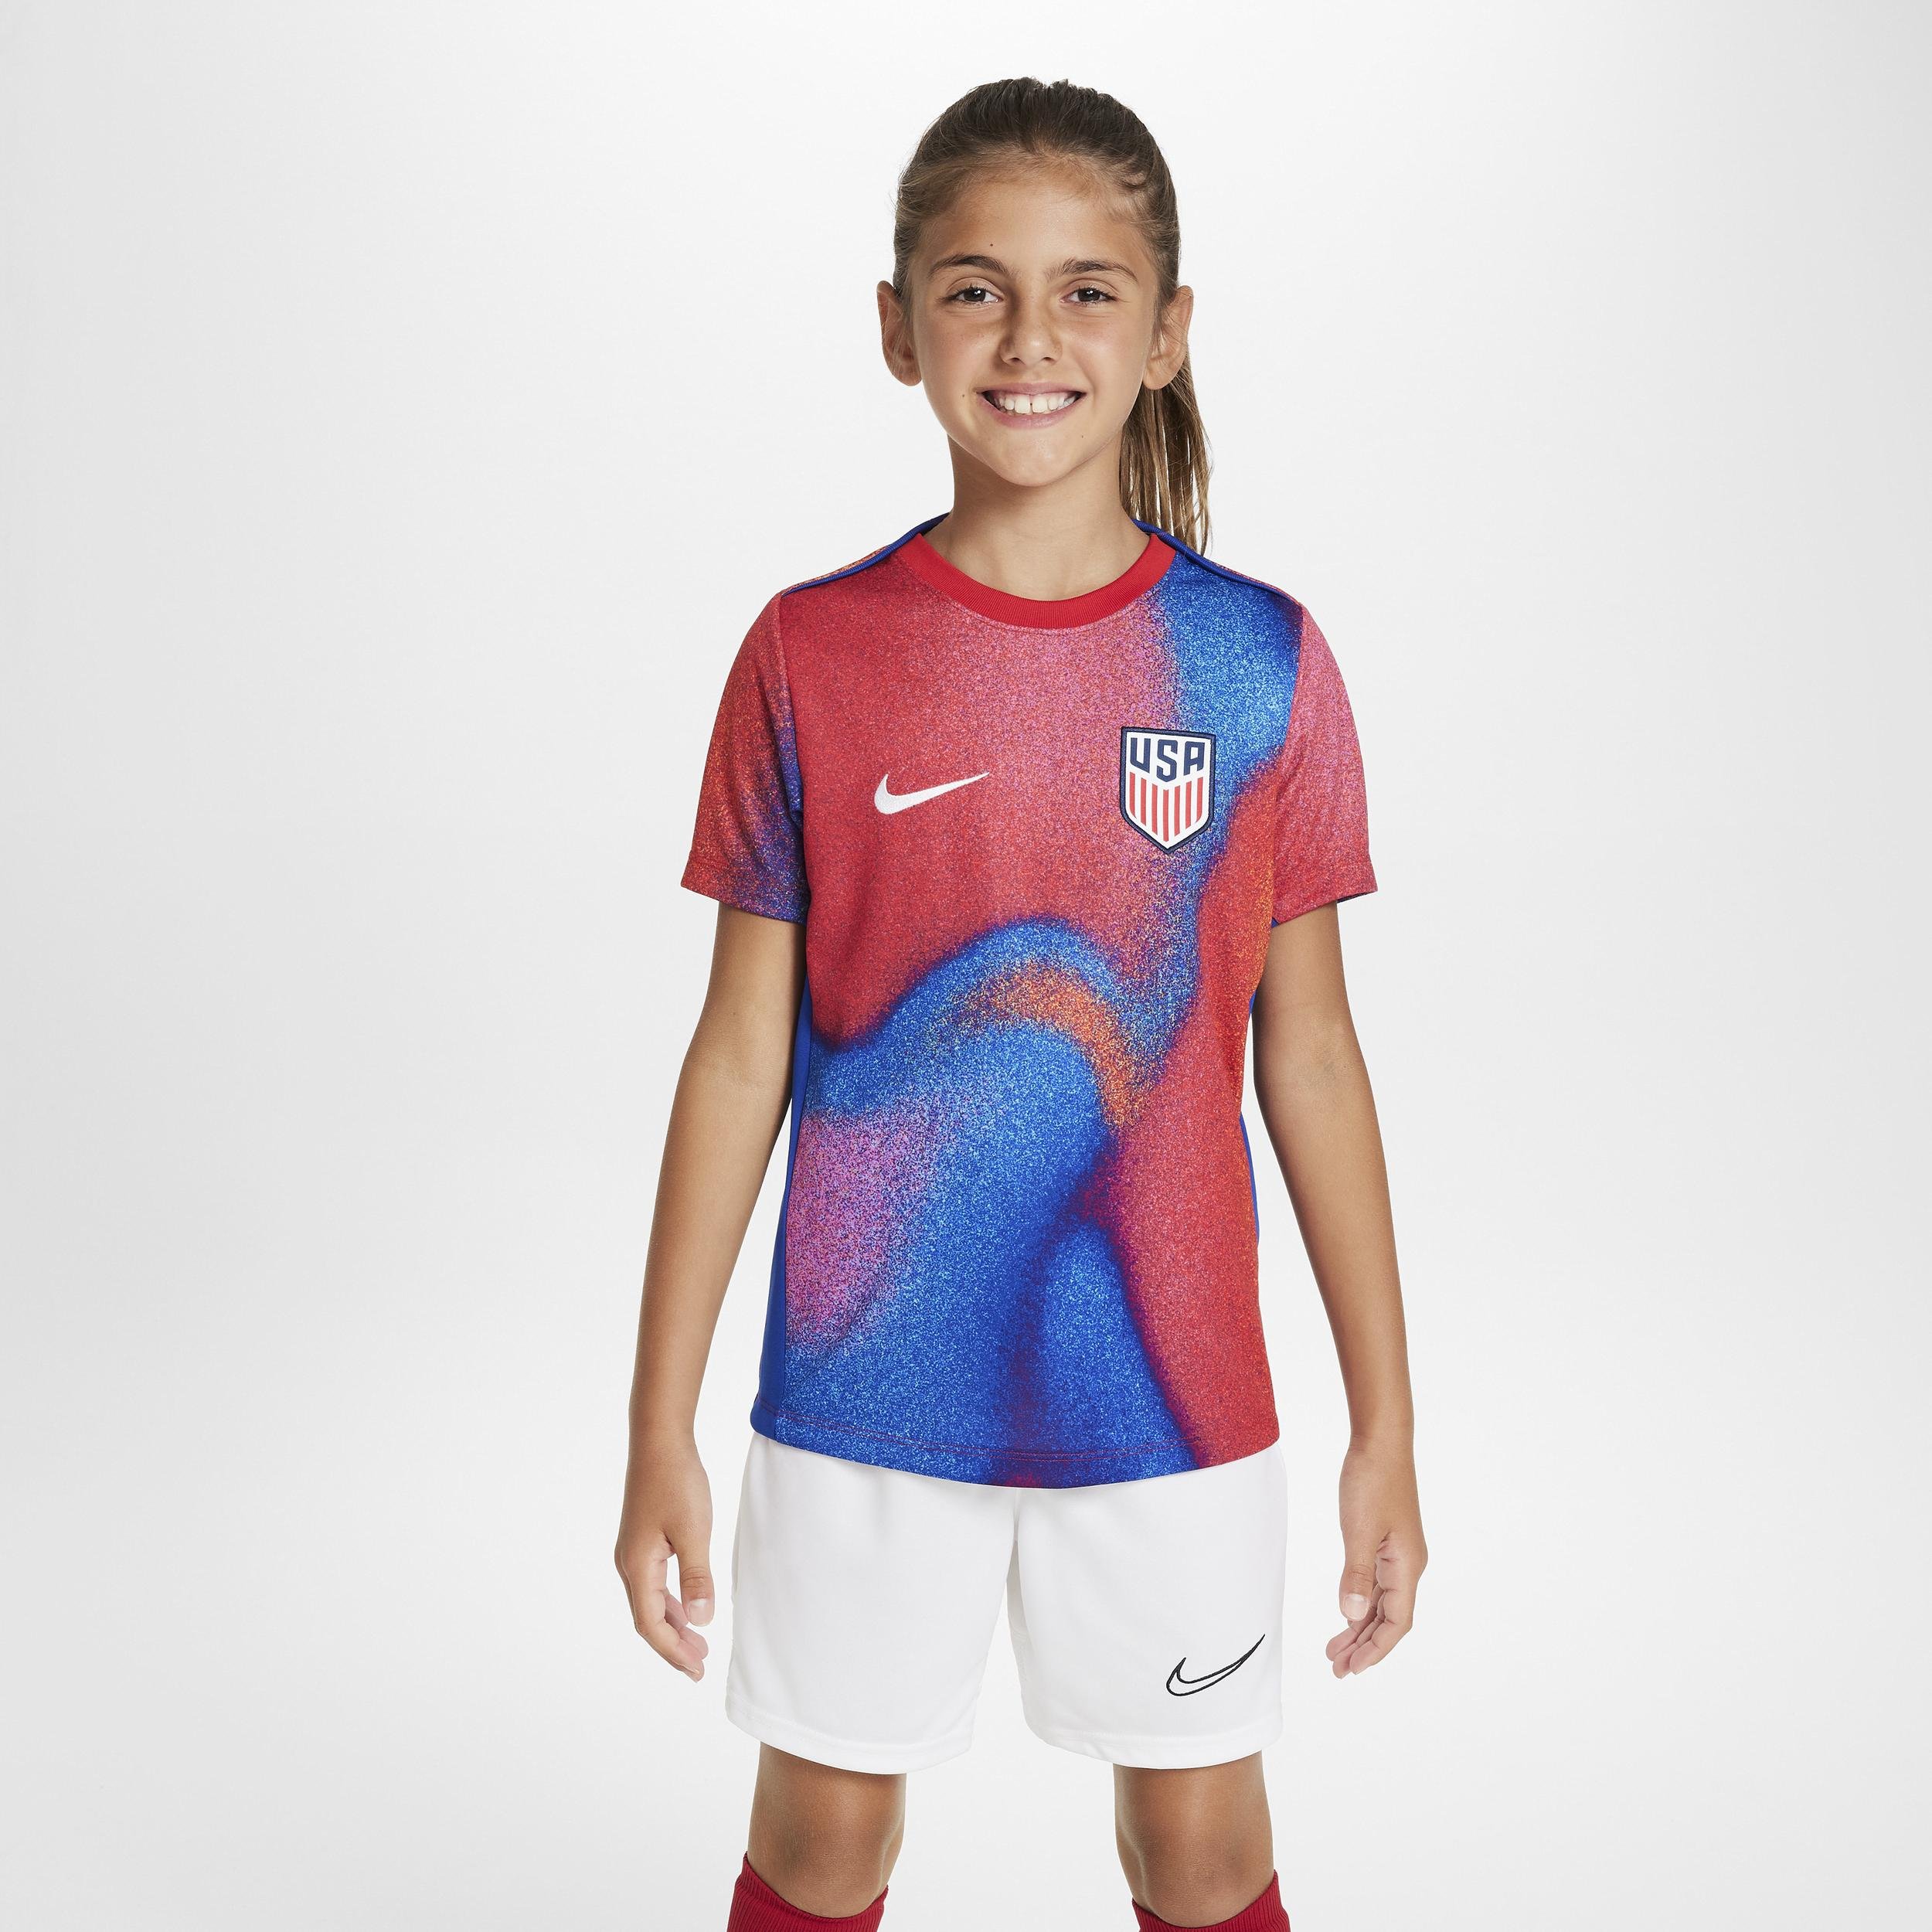 USMNT Academy Pro Big Kids' Nike Dri-FIT Soccer Pre-Match Short-Sleeve Top by NIKE